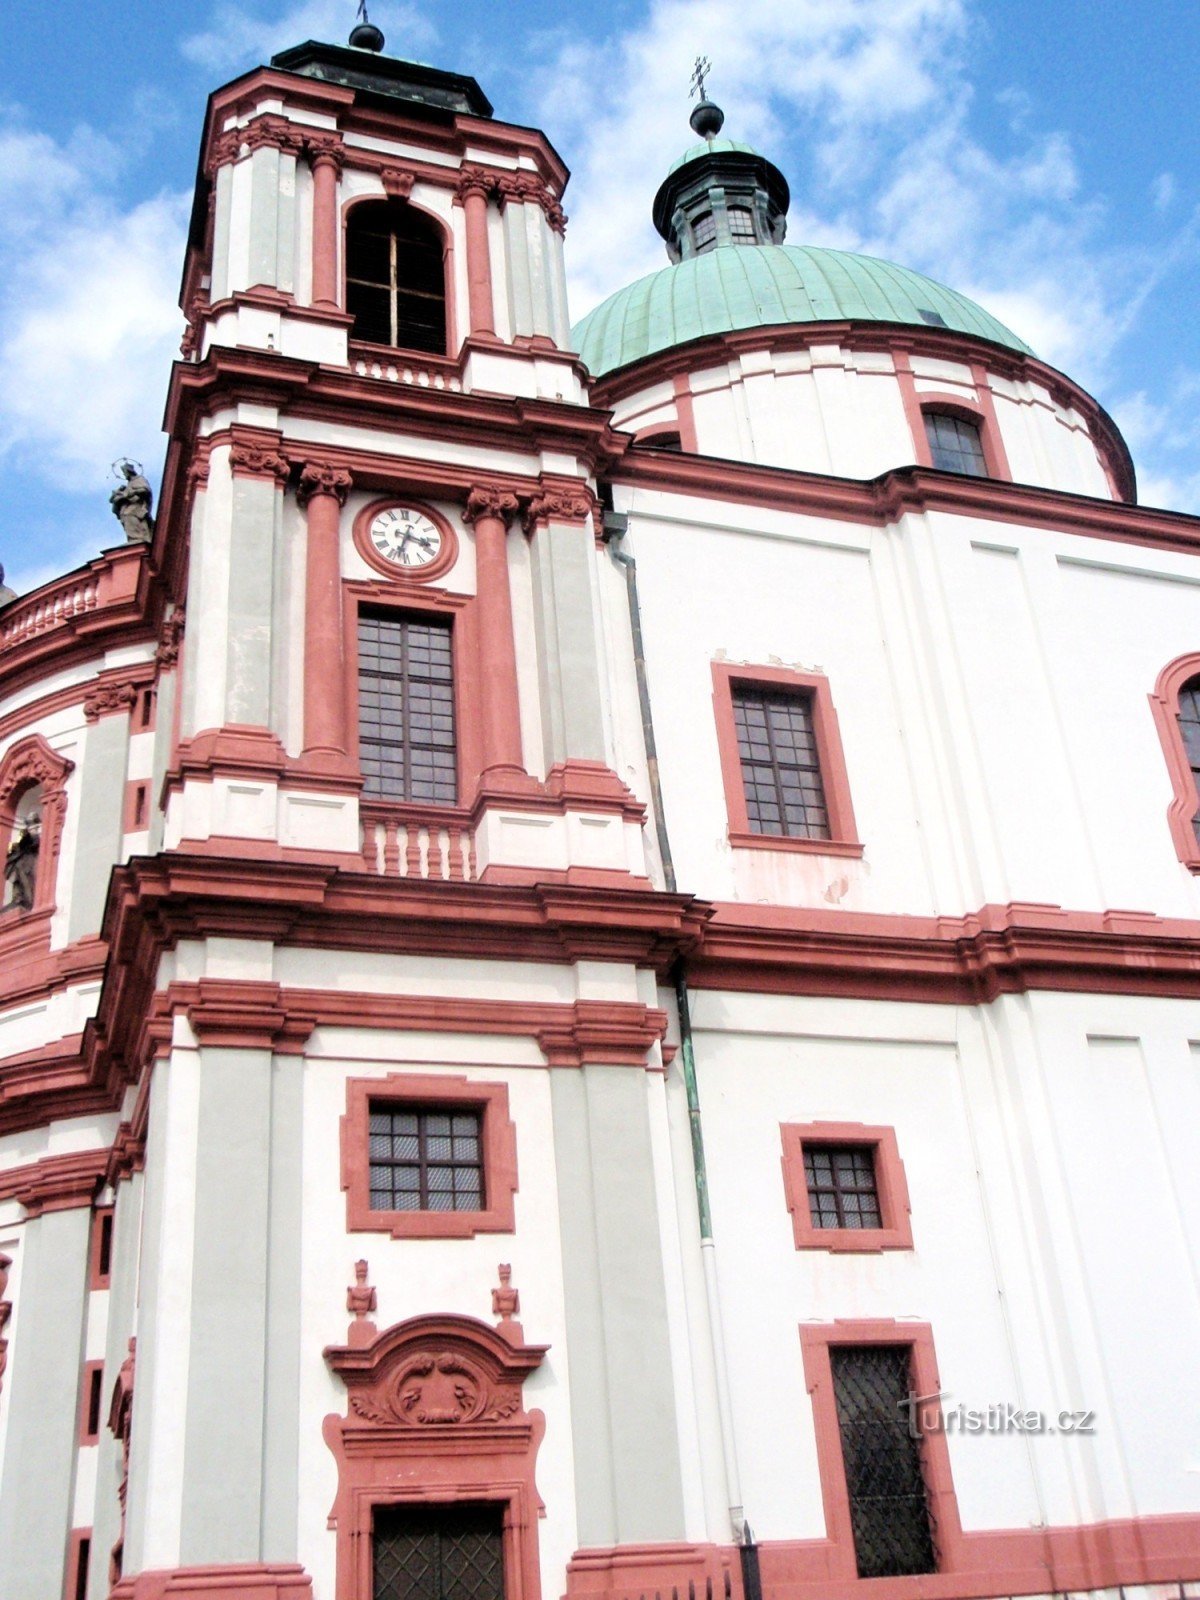 Bazilica Sf. Lawrence și St. Zdislavy